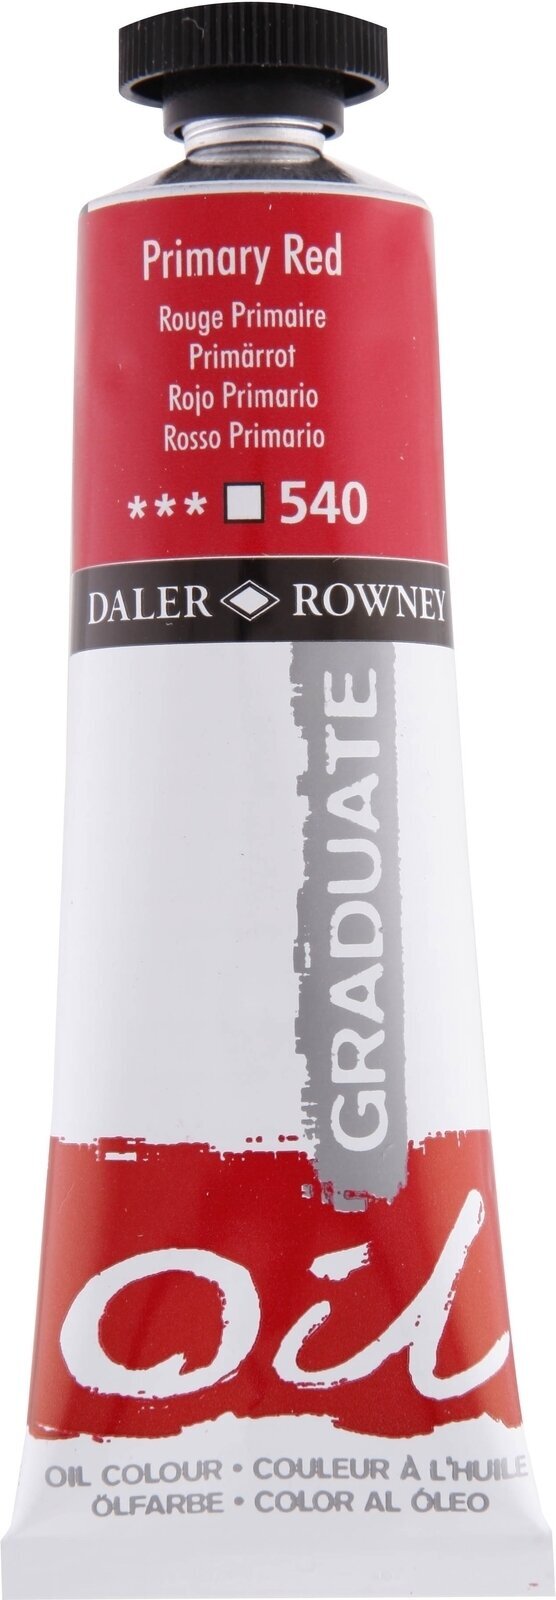 Olieverf Daler Rowney Graduate Olieverf Primary Red 38 ml 1 stuk